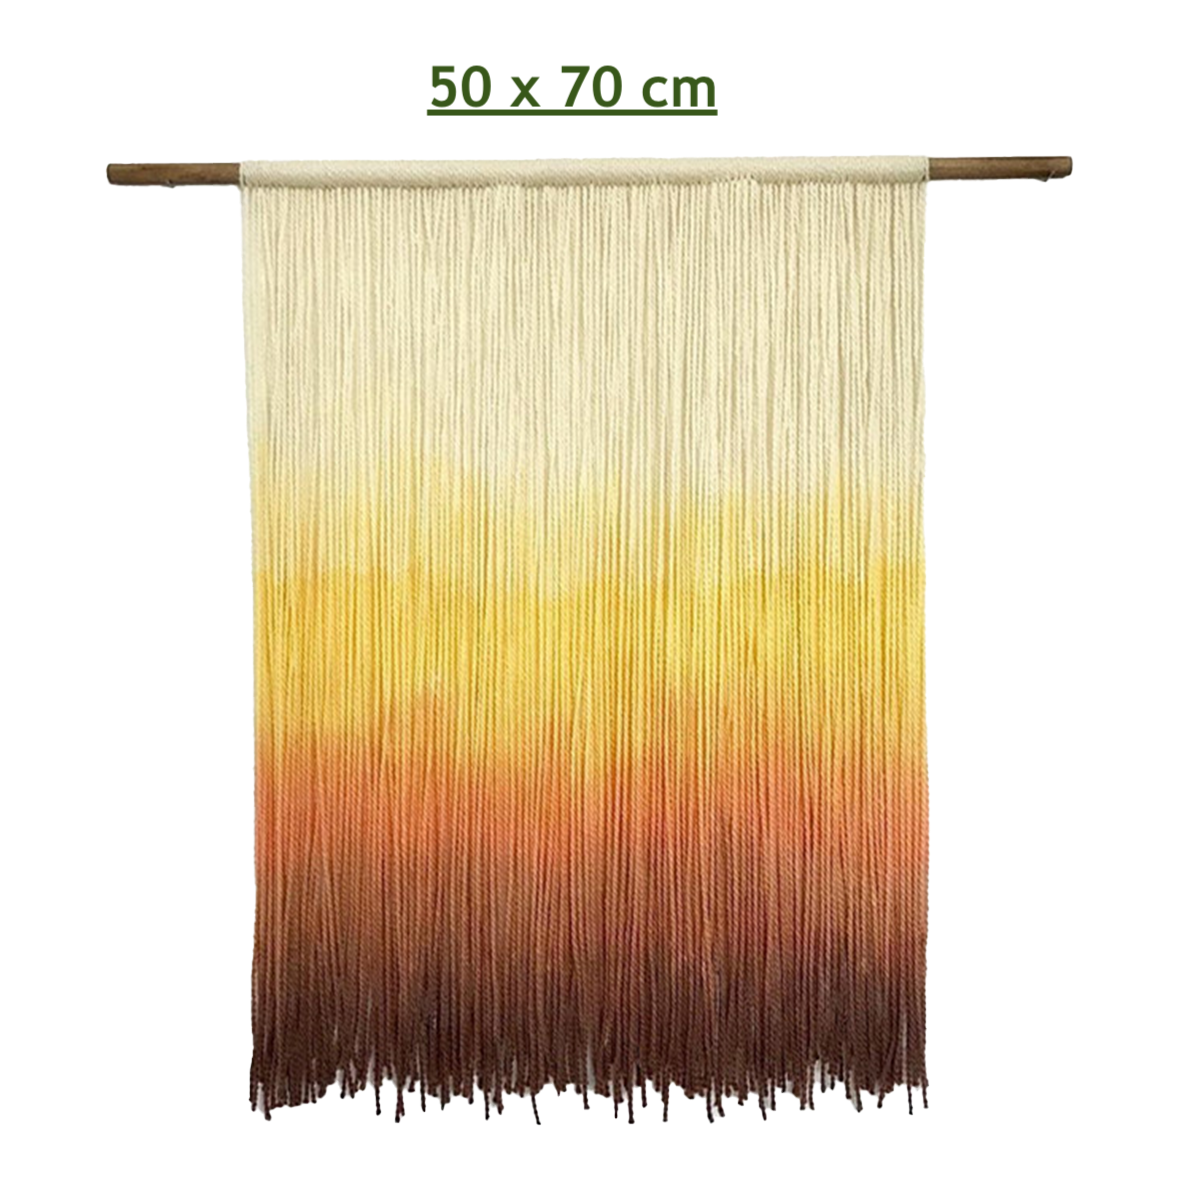 Hue-tiful Hand-Dyed Macrame Wall Hanging Art